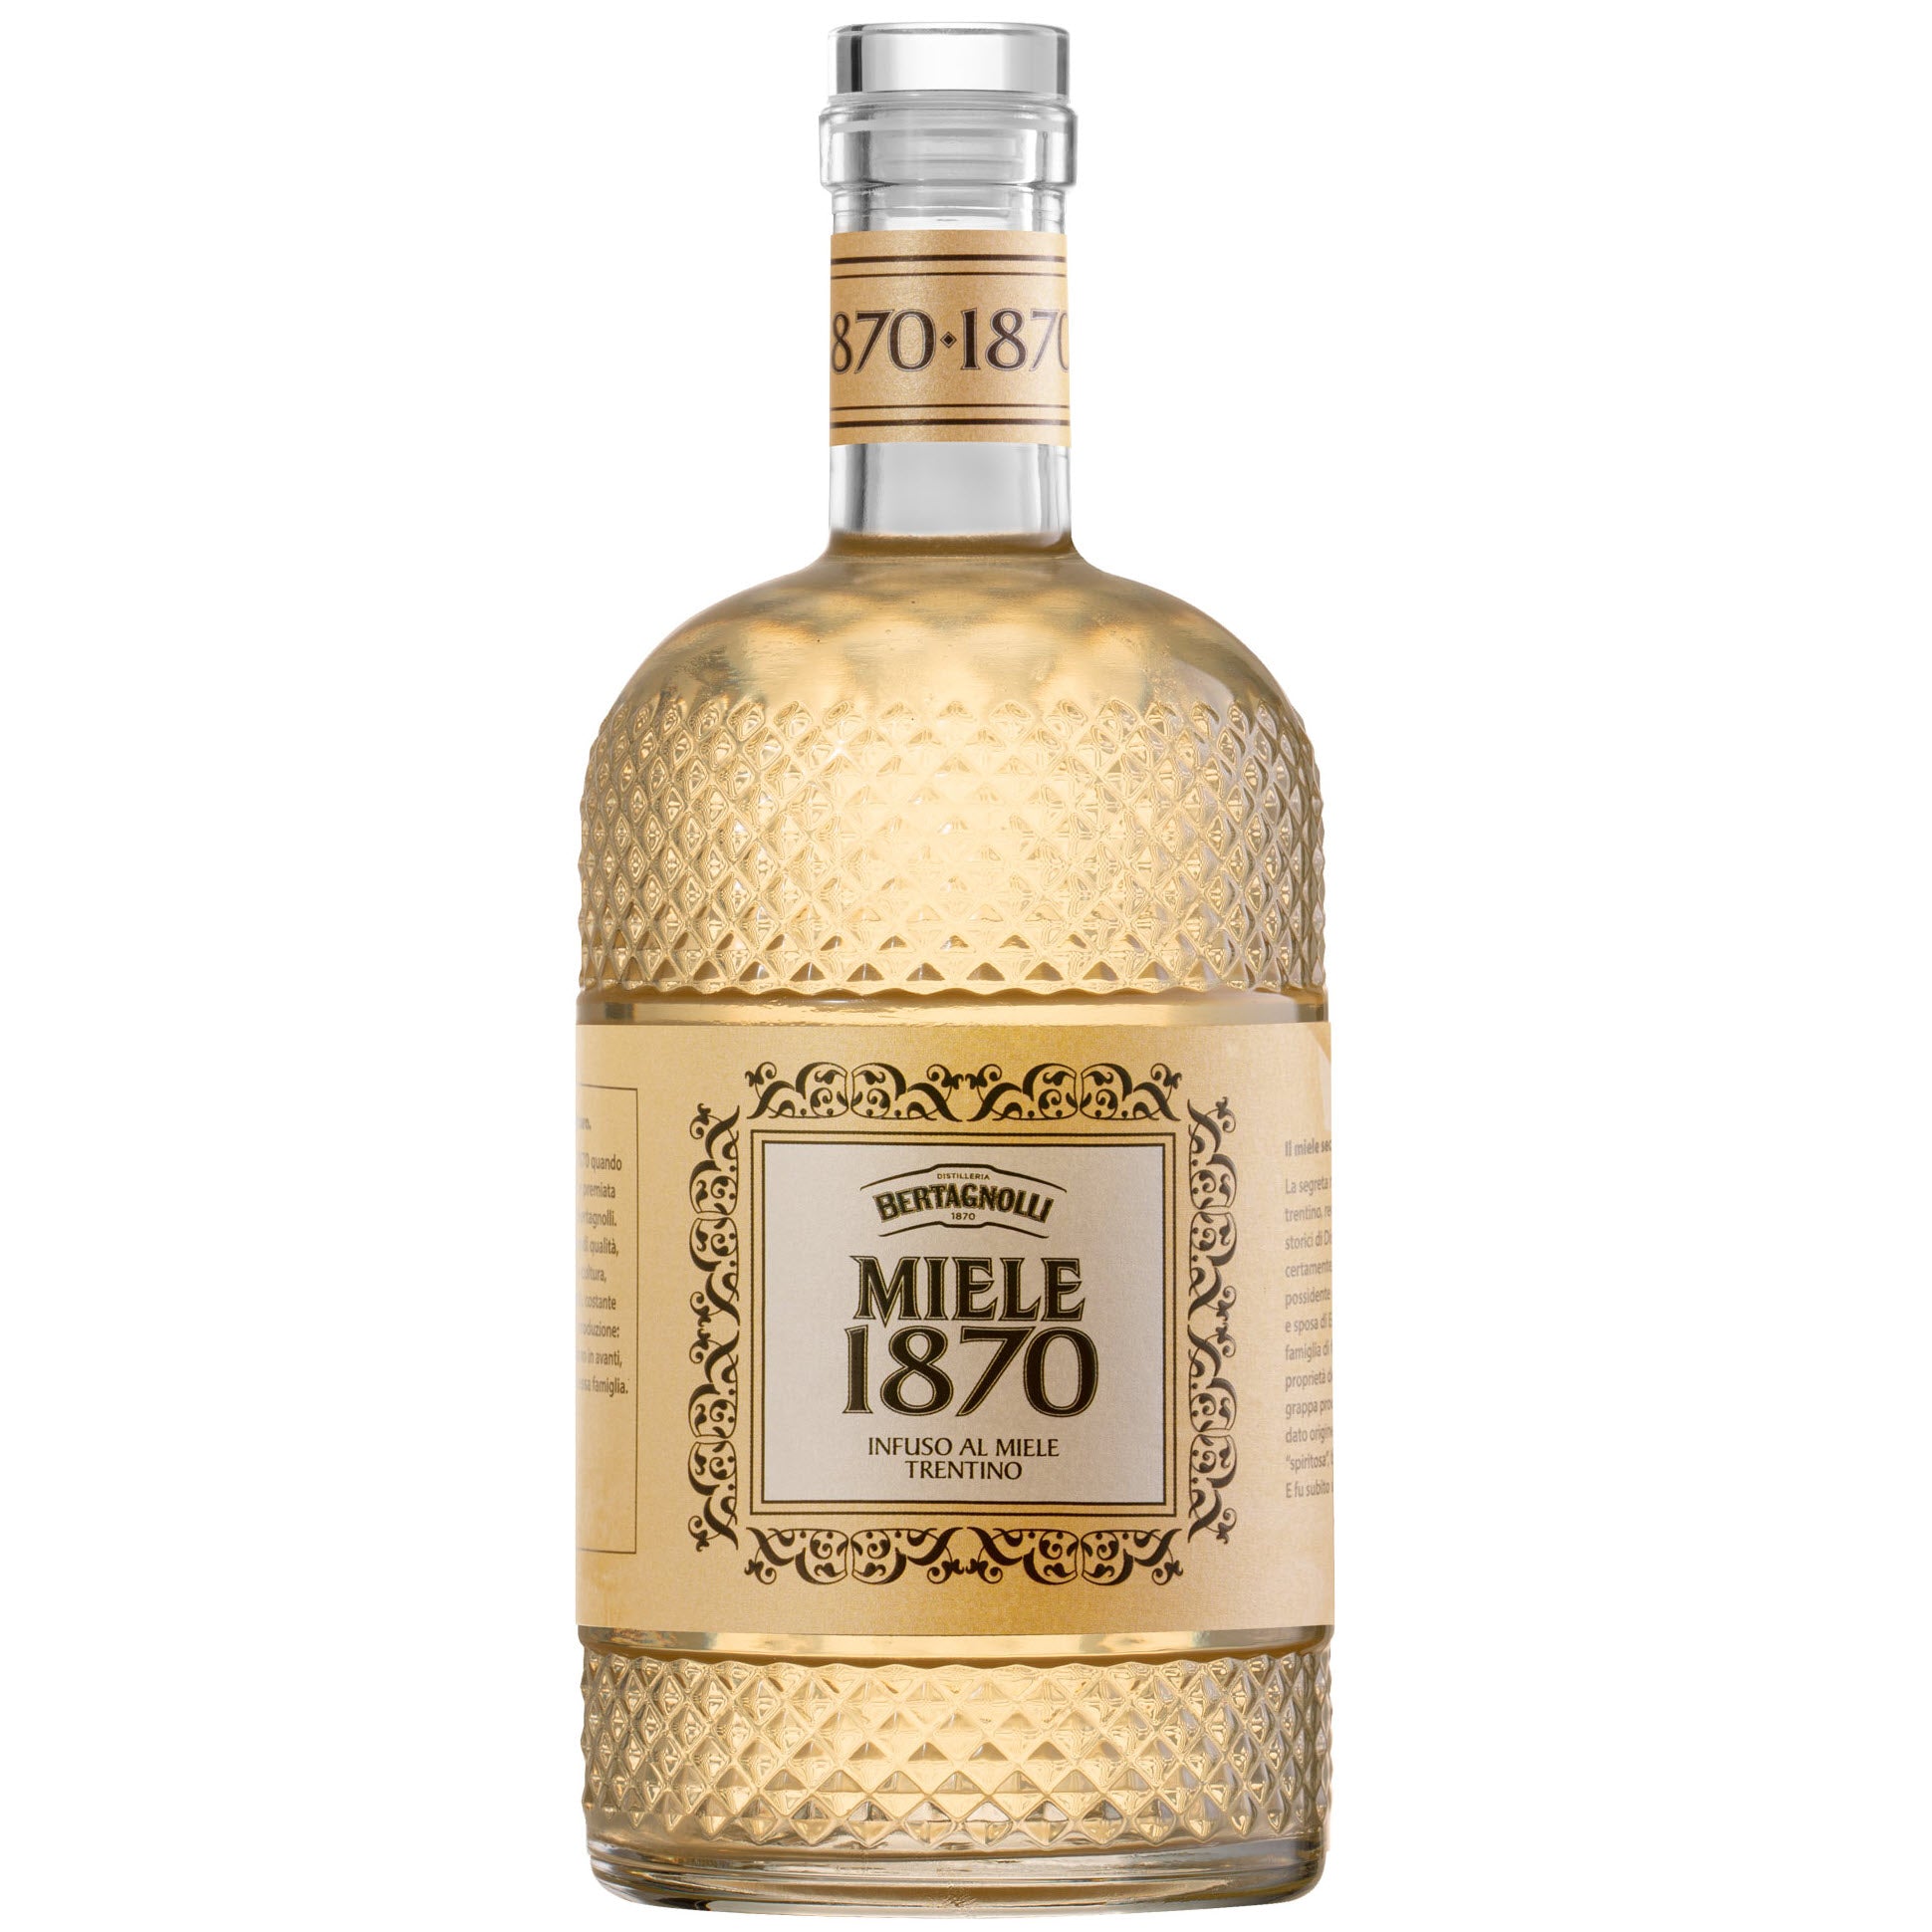 Image of Liquore Miele 1870 - 70cl